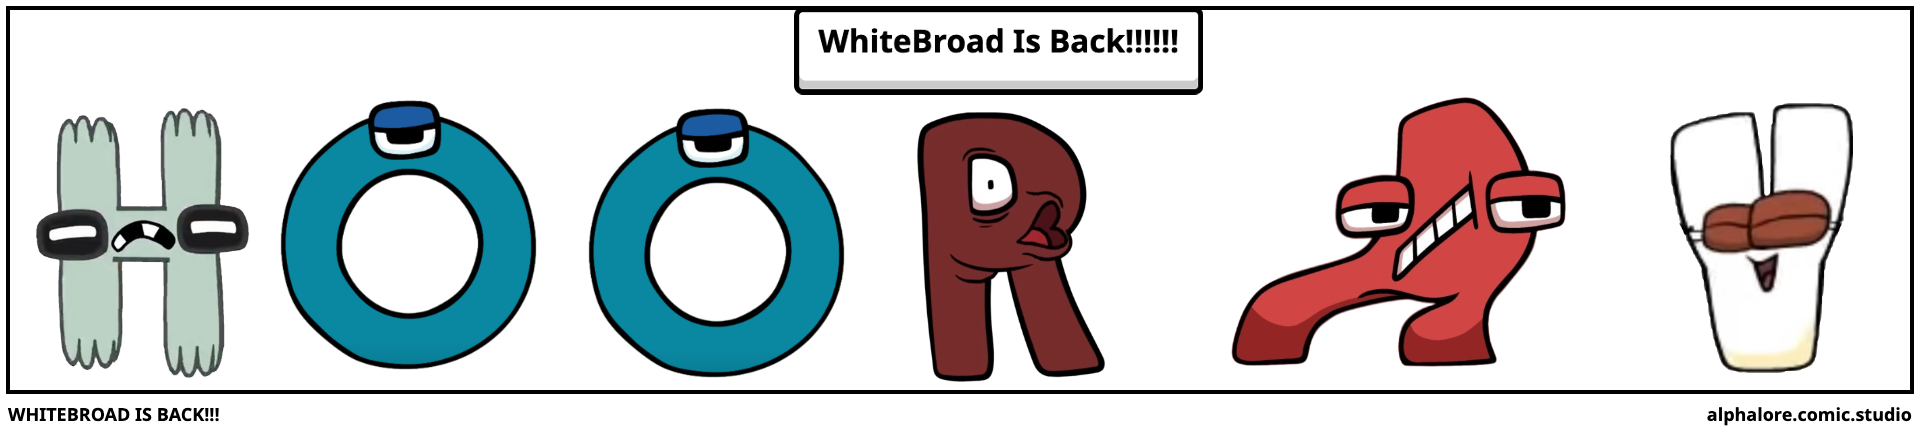 WHITEBROAD IS BACK!!!